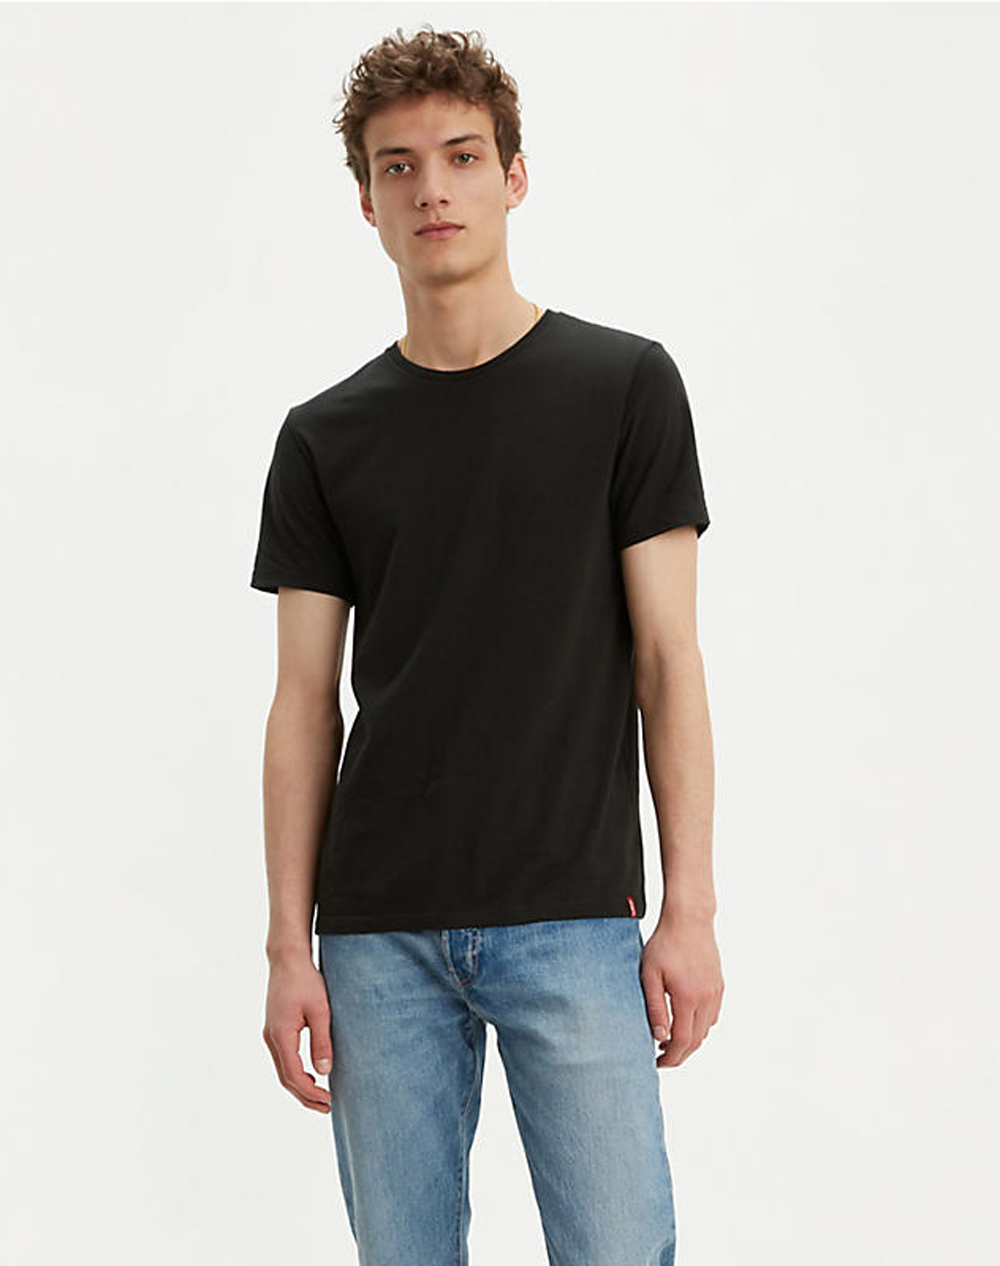 Levi’s® camiseta de hombre básica de manga corta 79541-0001 negra